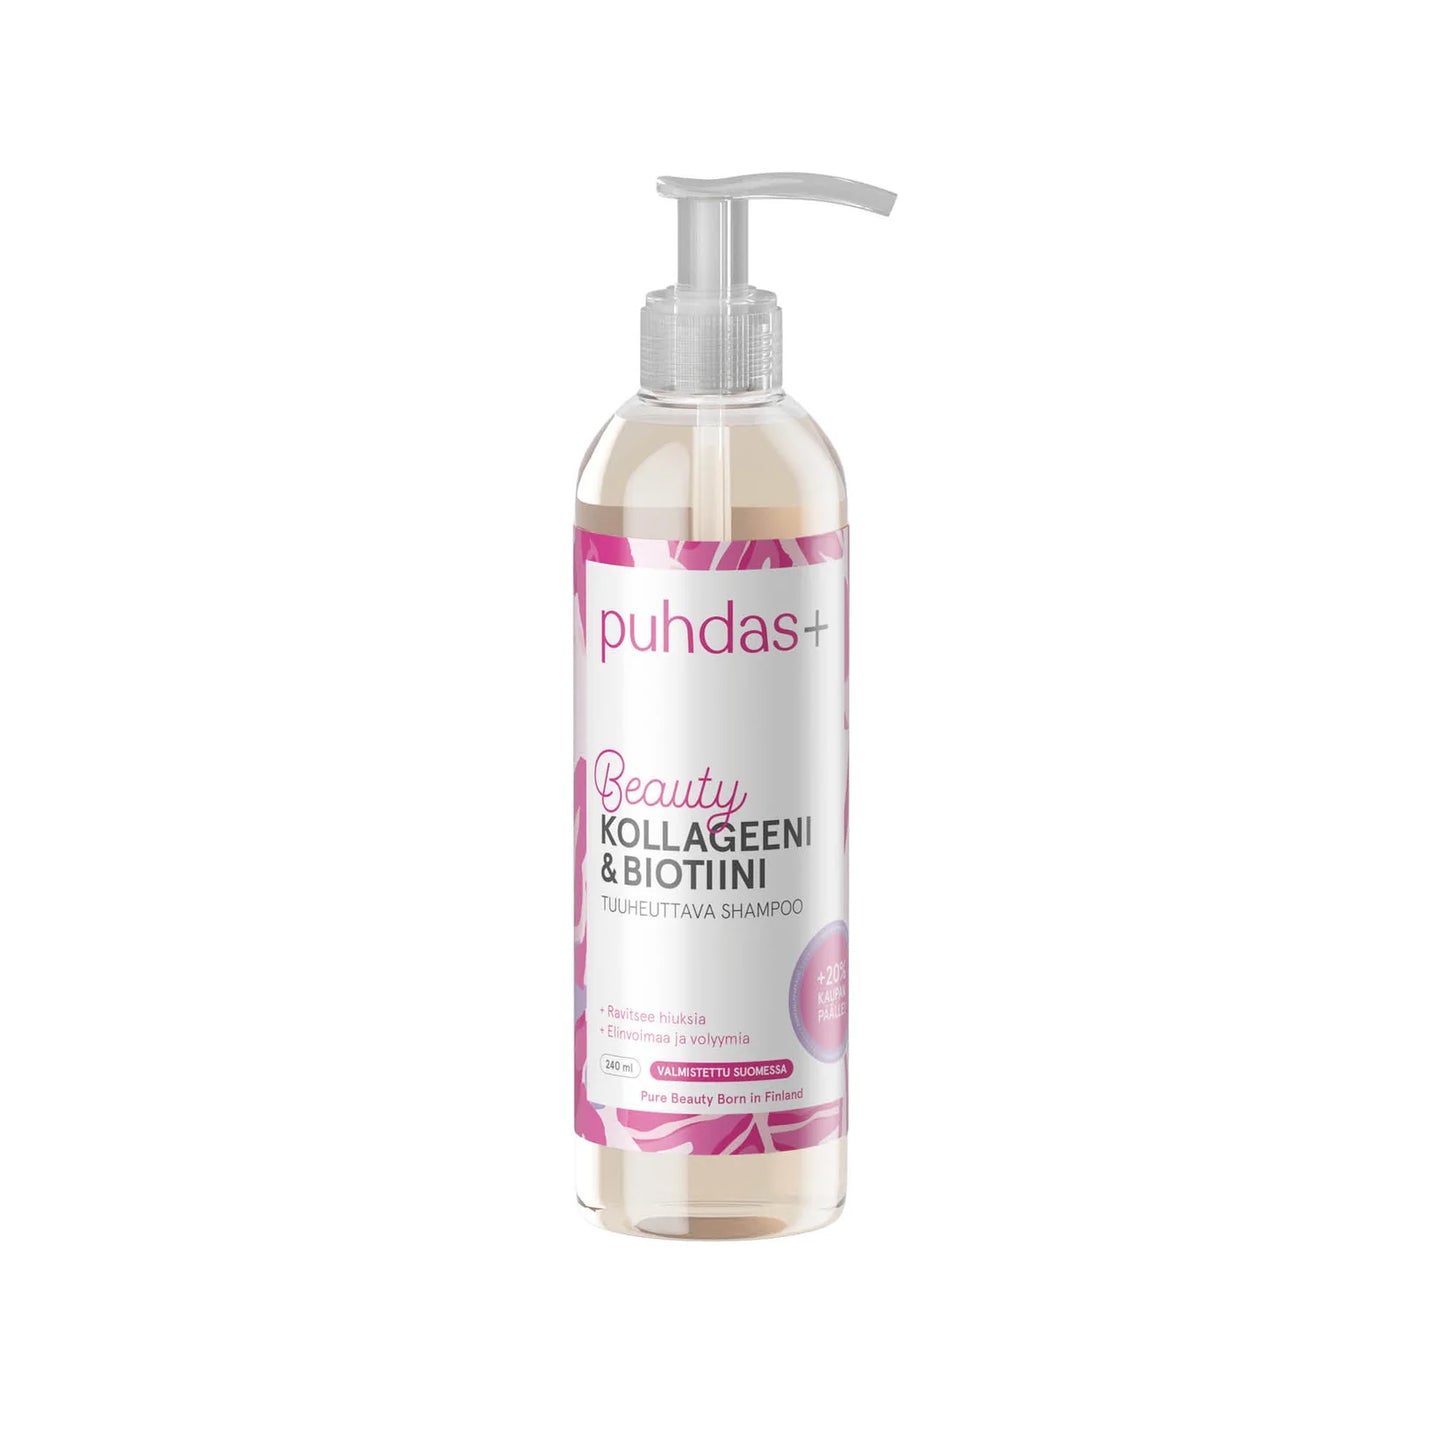 PUHDAS+ Beauty kollageeni & biotiini shampoo 240 ml